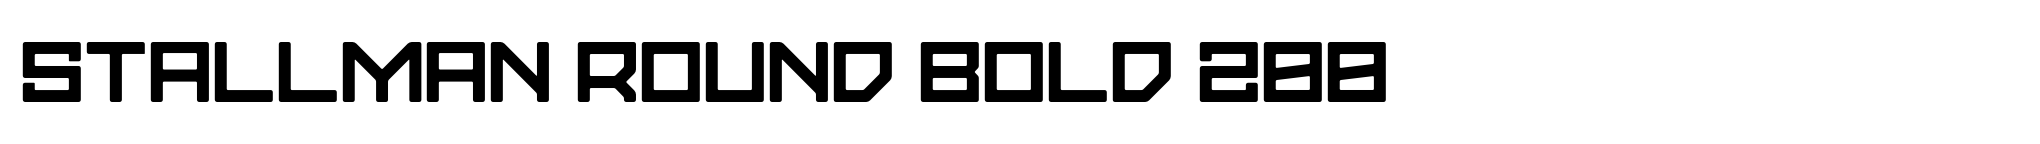 Stallman Round Bold 200 image